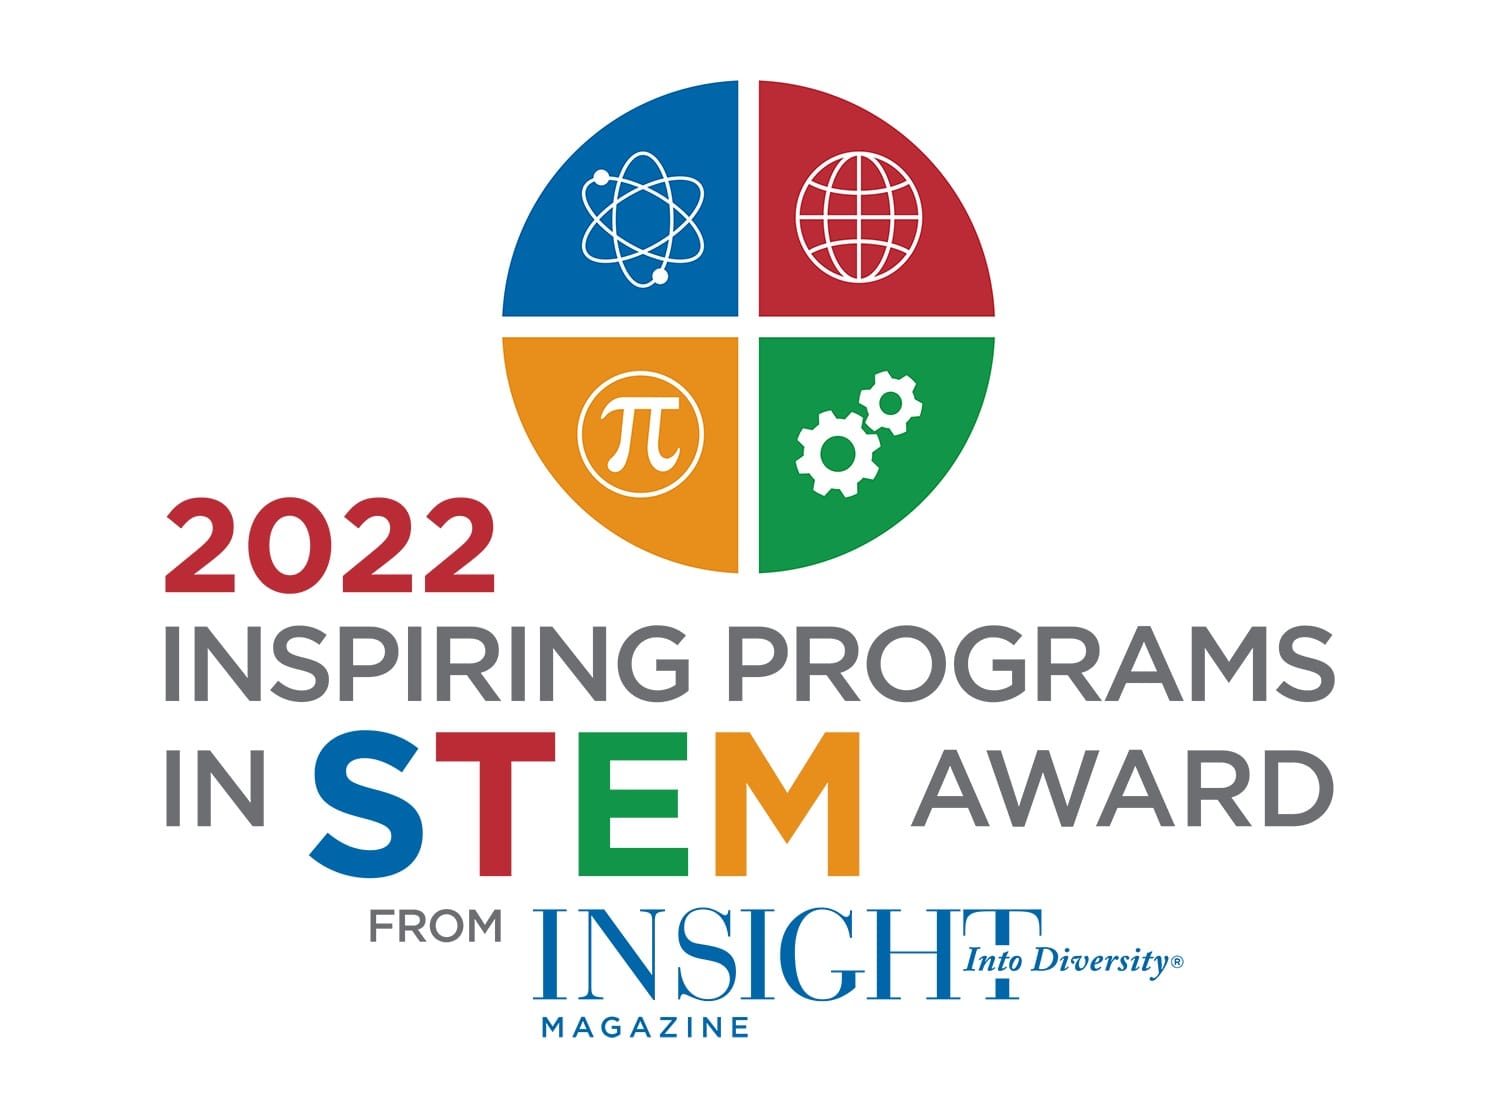 2022 Inspiring Programs in STEM Award from Insight Into Diversity